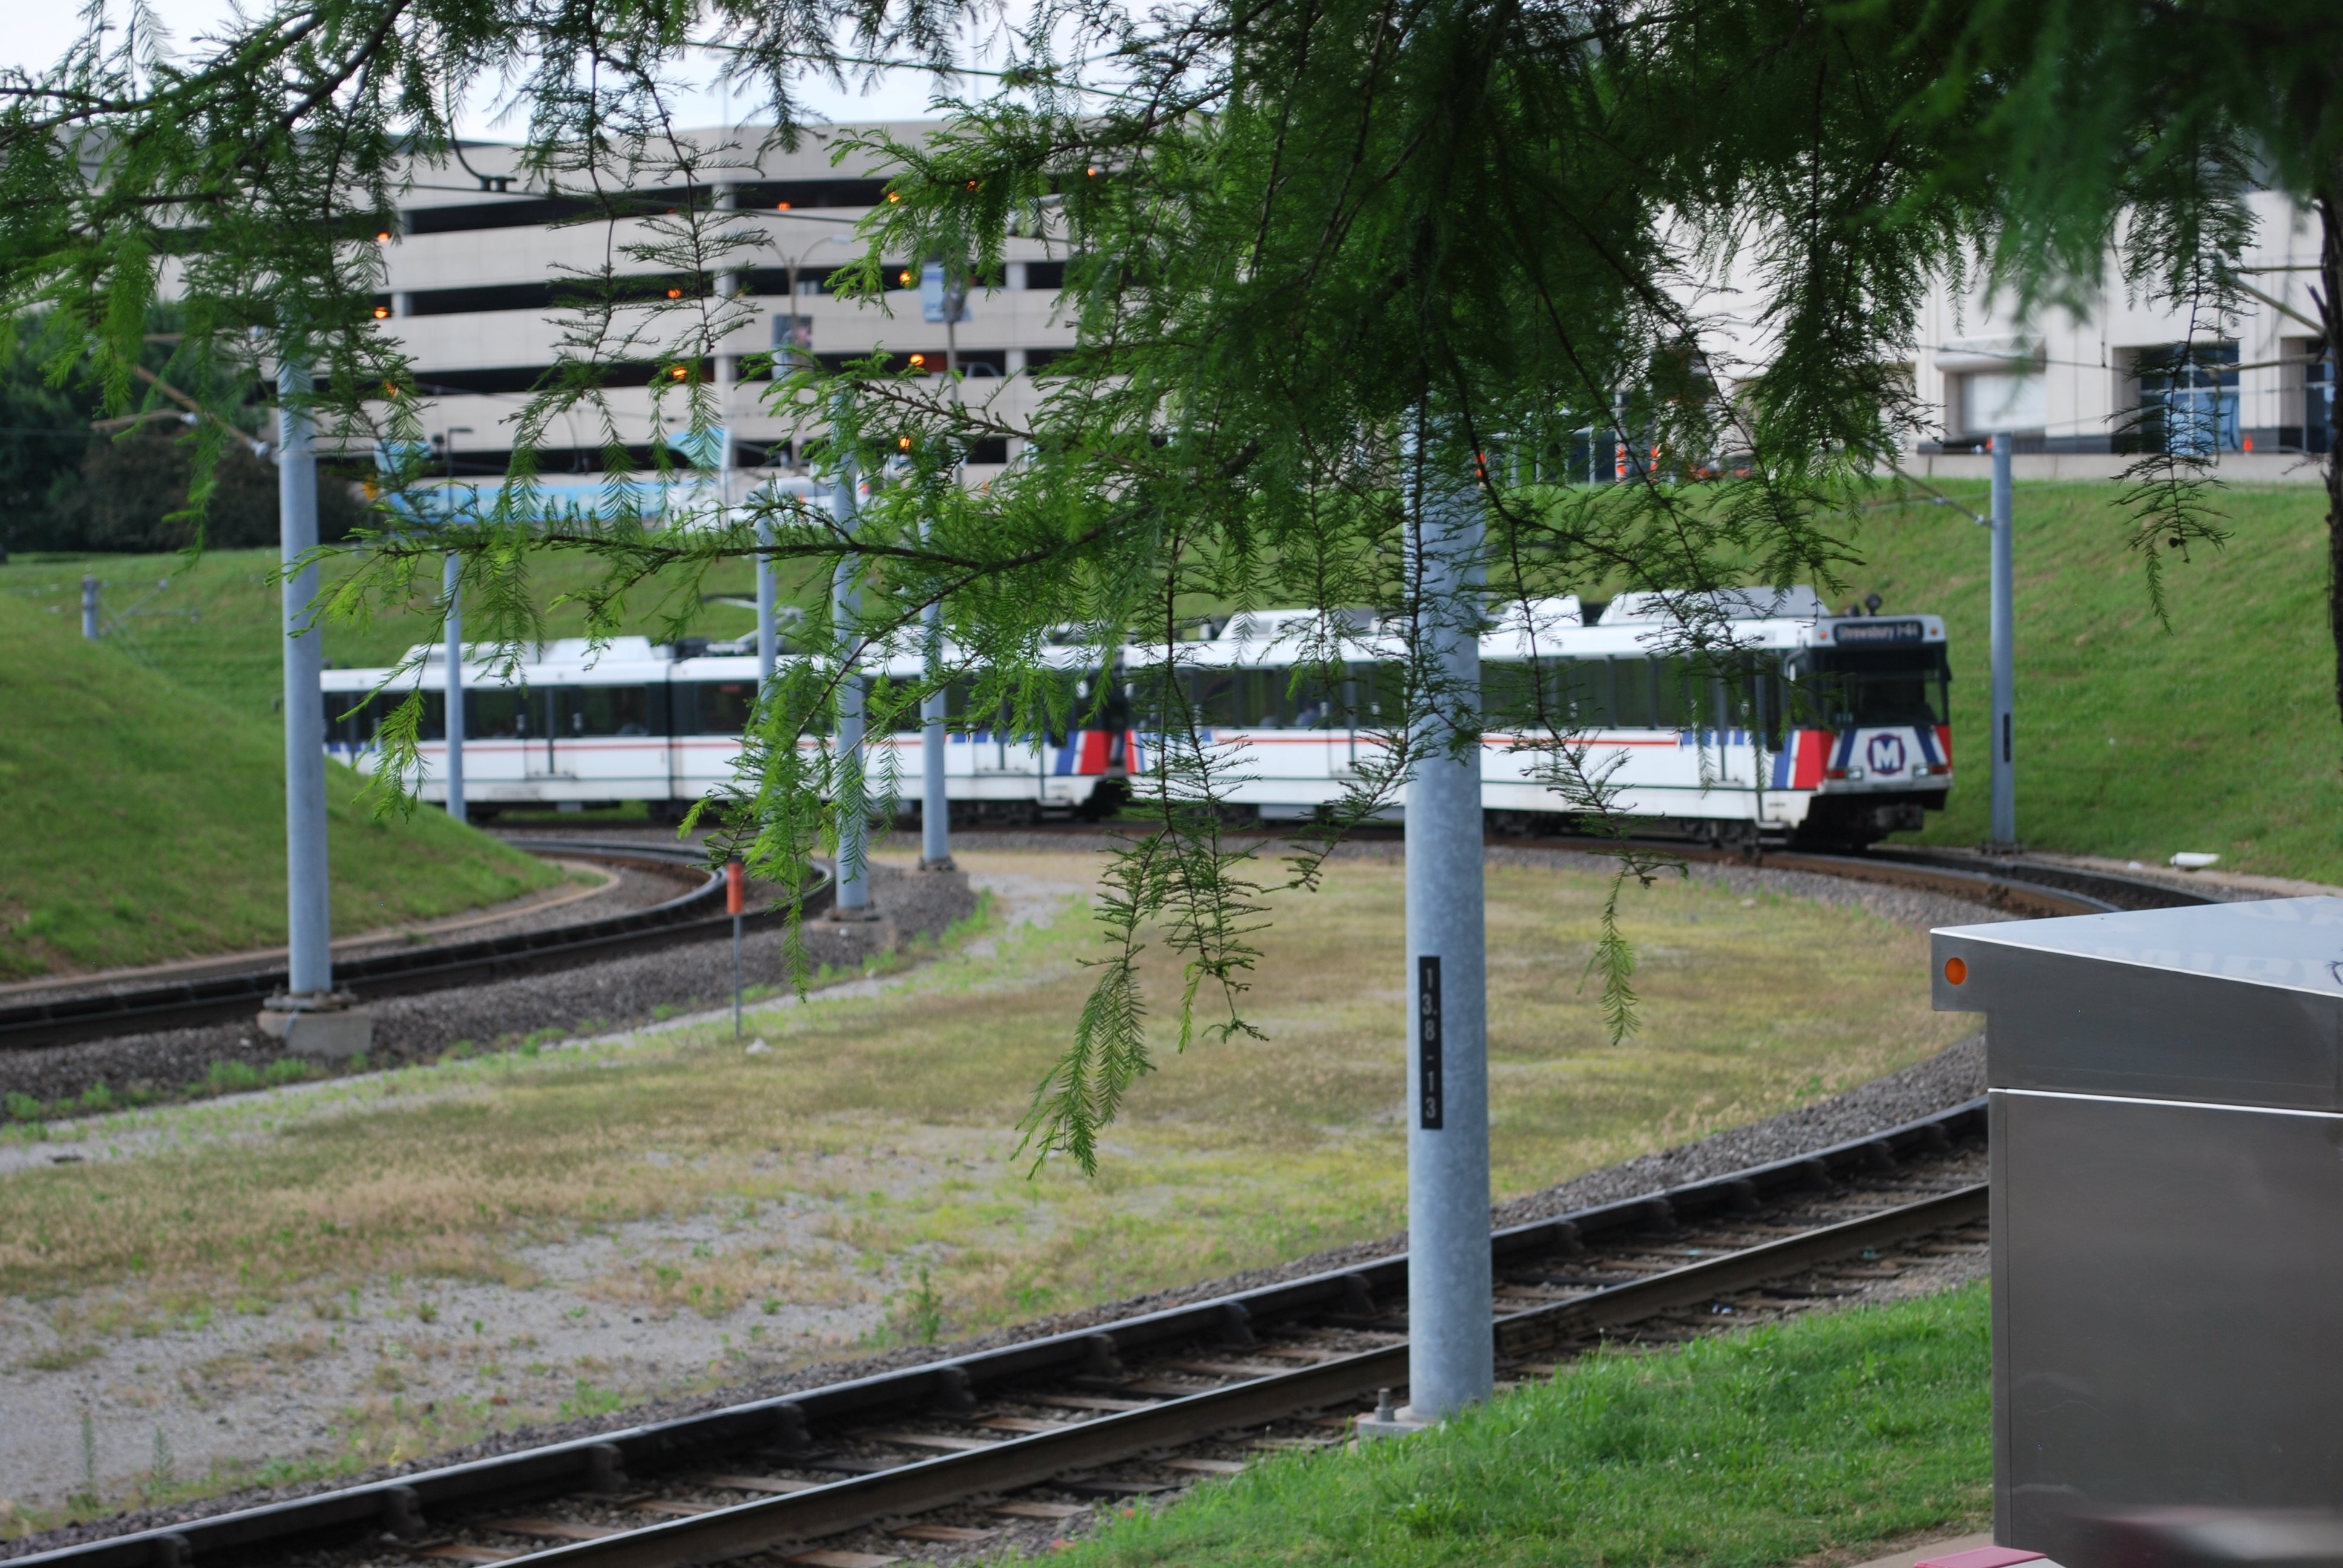 MetroLink train en route to Civic Center